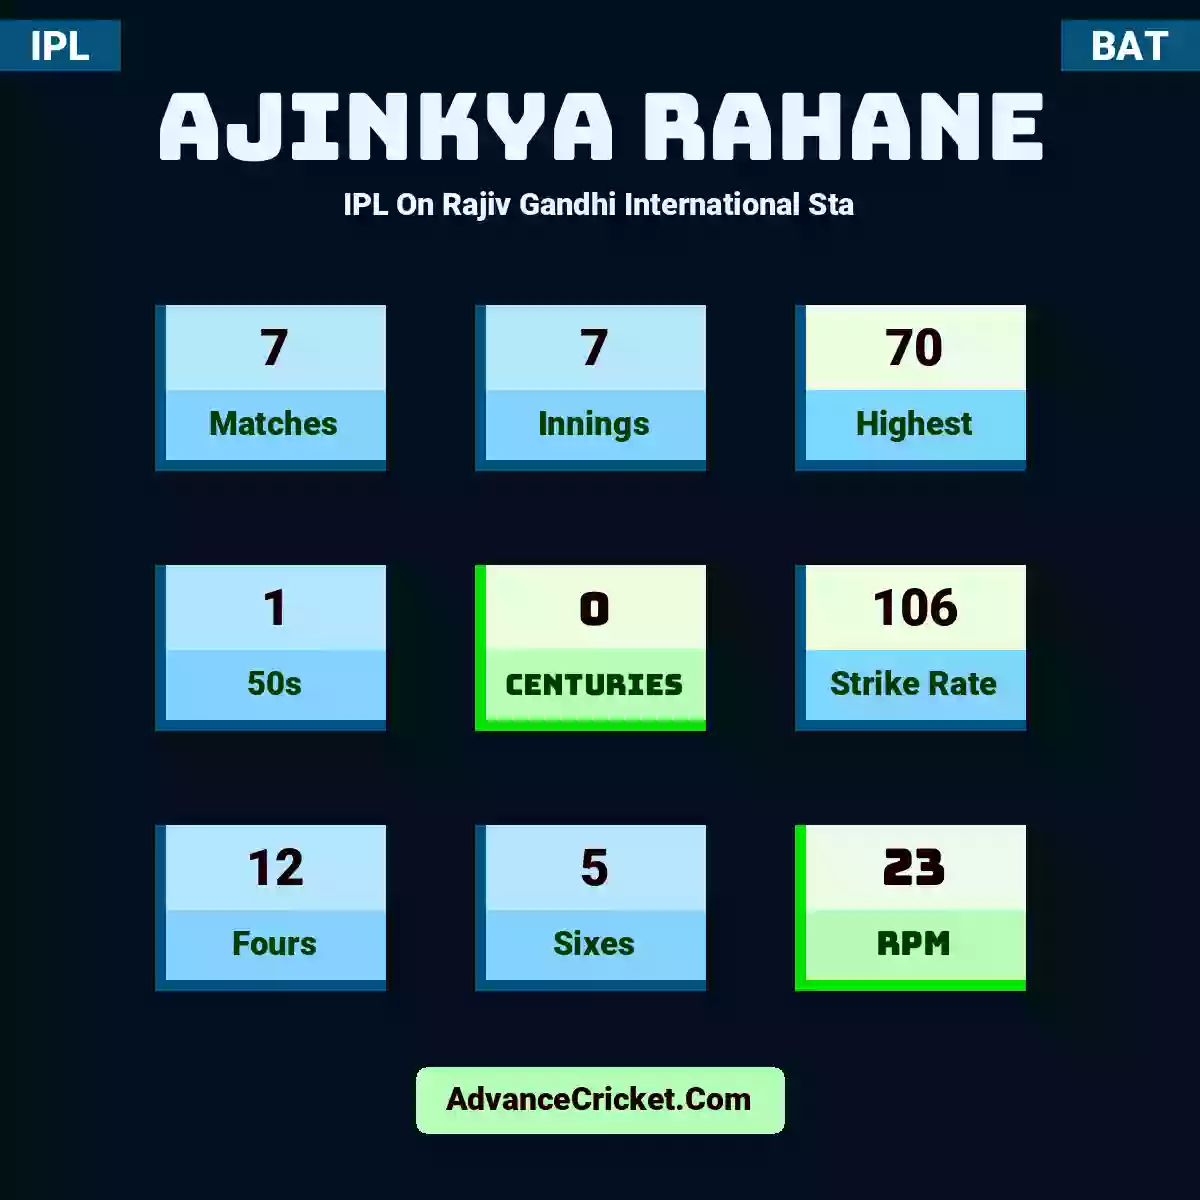 Ajinkya Rahane IPL  On Rajiv Gandhi International Sta, Ajinkya Rahane played 7 matches, scored 70 runs as highest, 1 half-centuries, and 0 centuries, with a strike rate of 106. A.Rahane hit 12 fours and 5 sixes, with an RPM of 23.